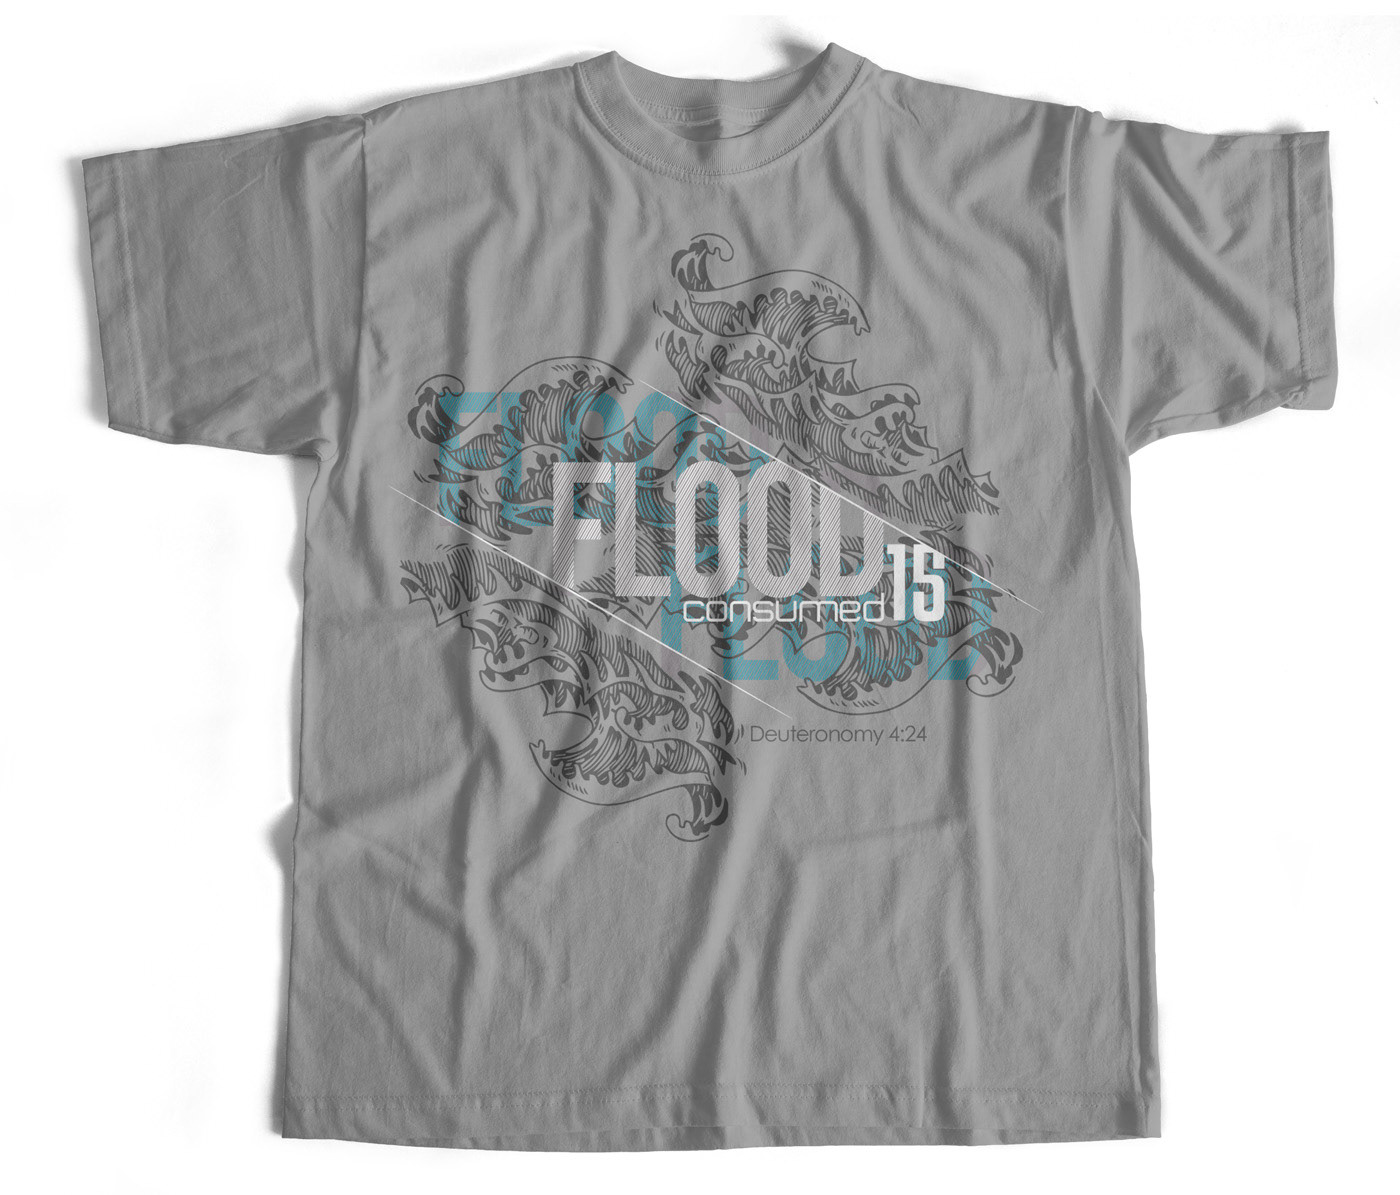 apparel Apparel Design shirt design tee shirt Tshirt Design